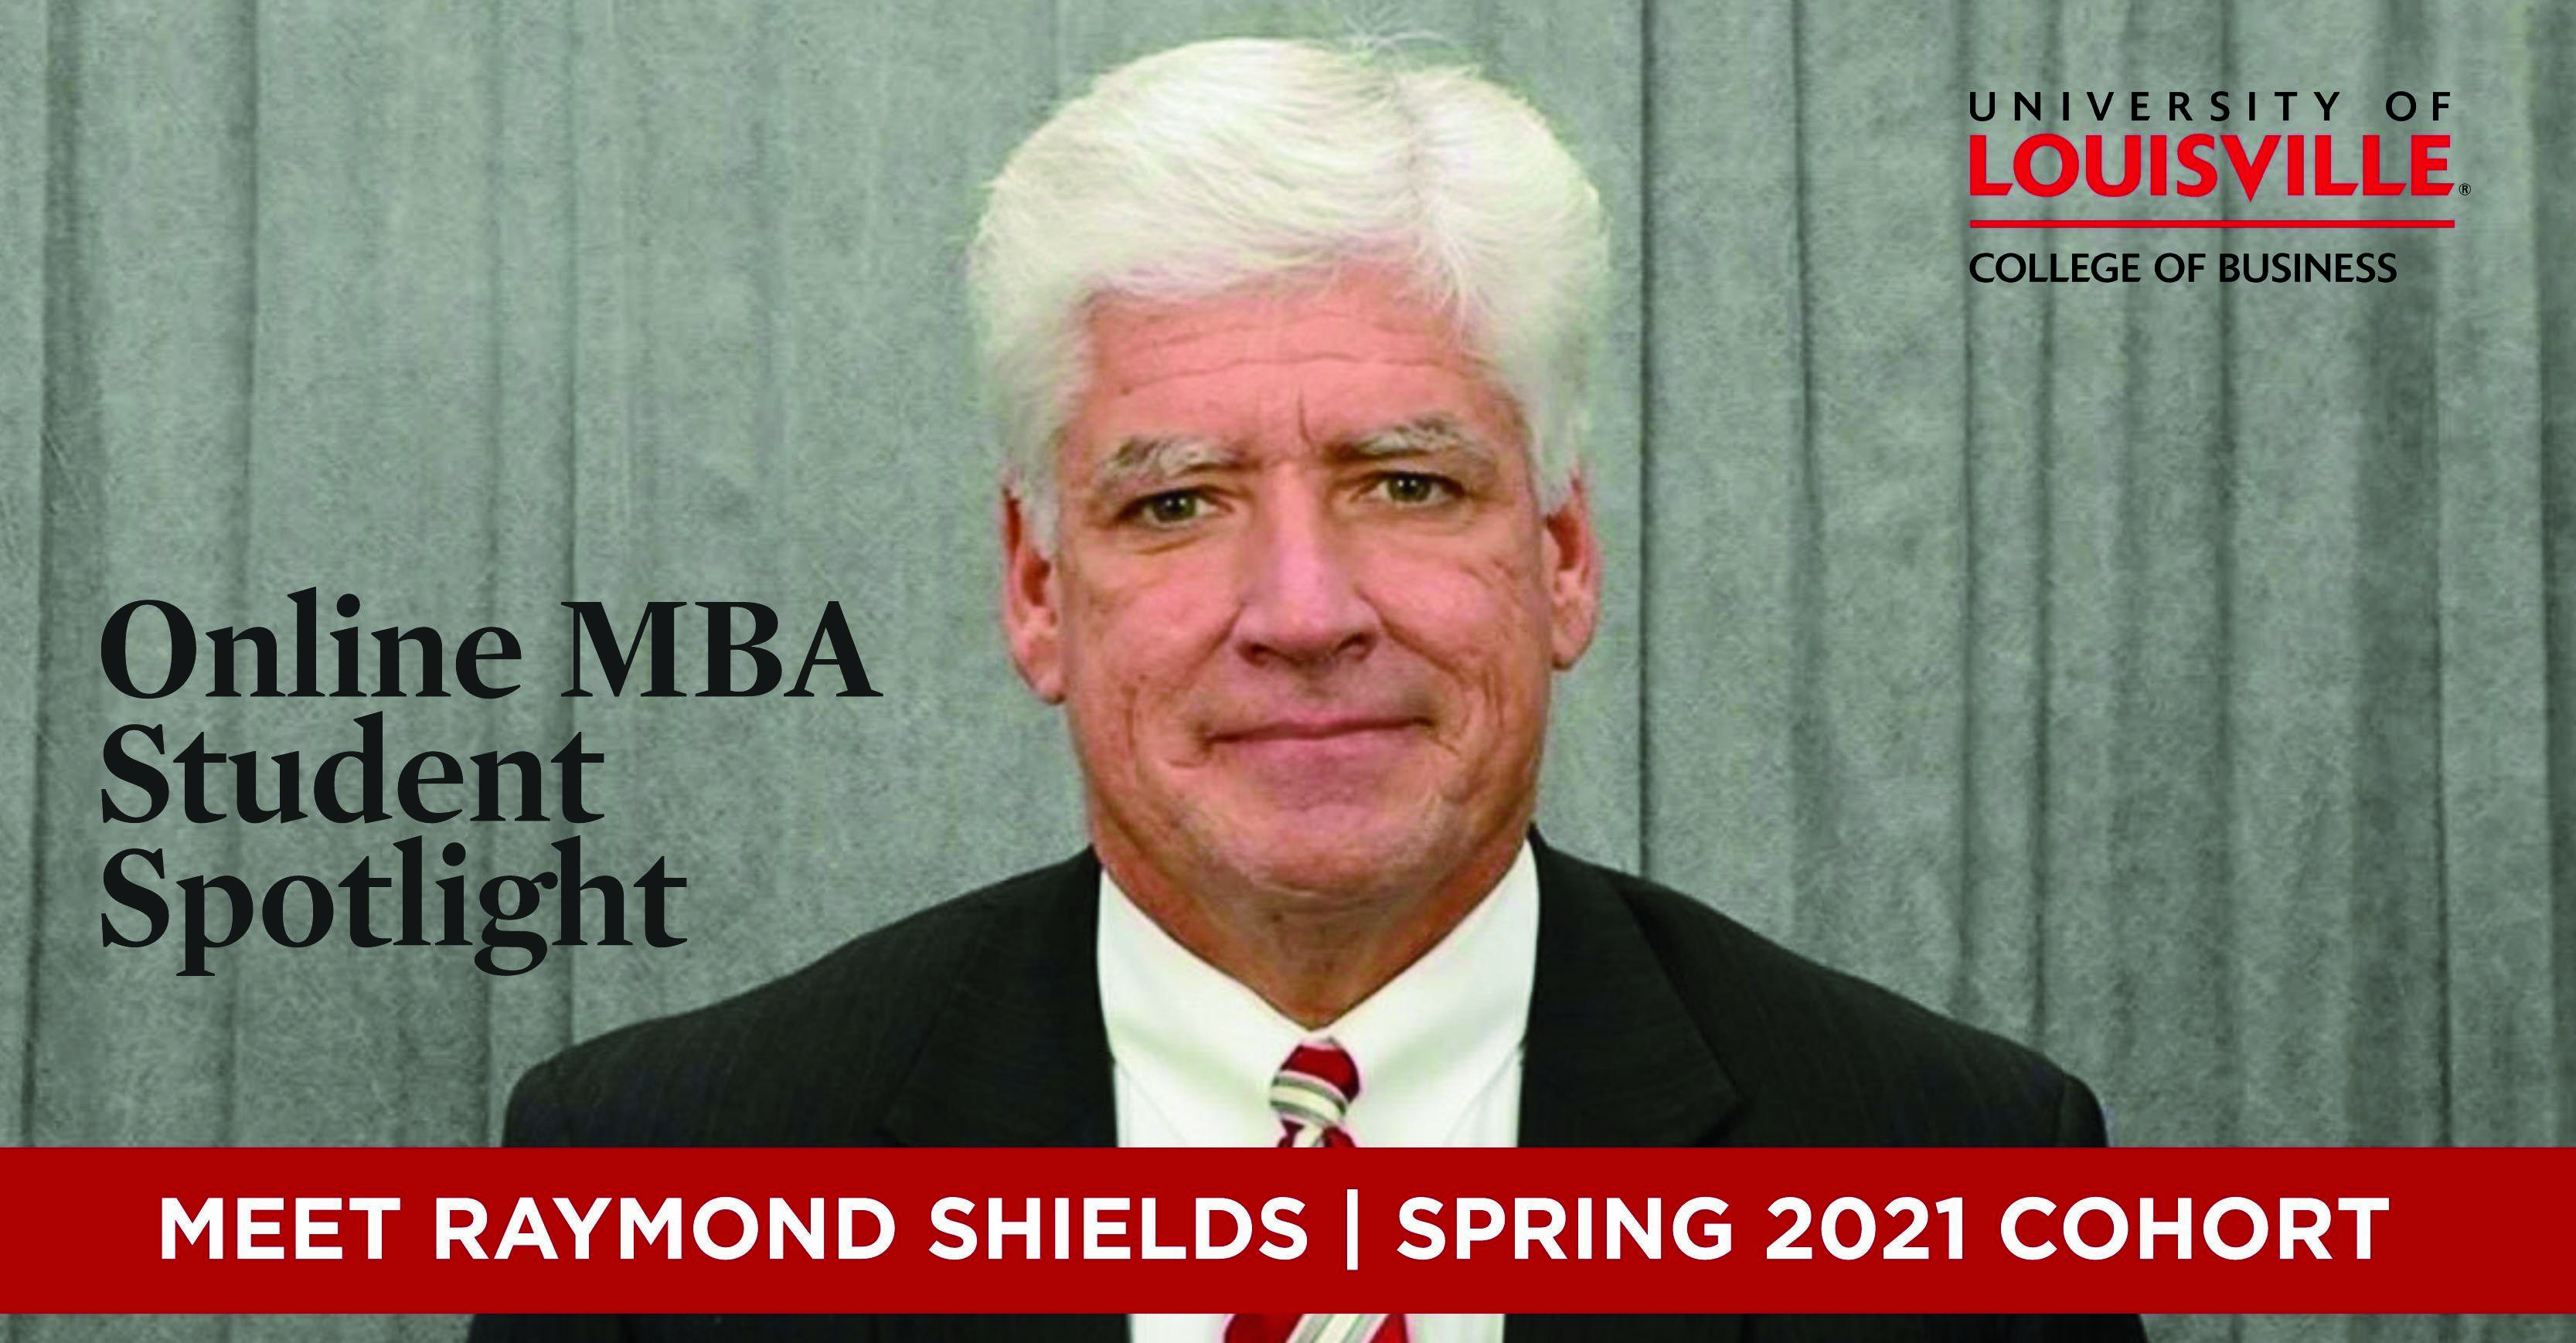 Raymond Shield OMBA 学生聚光灯标题图片